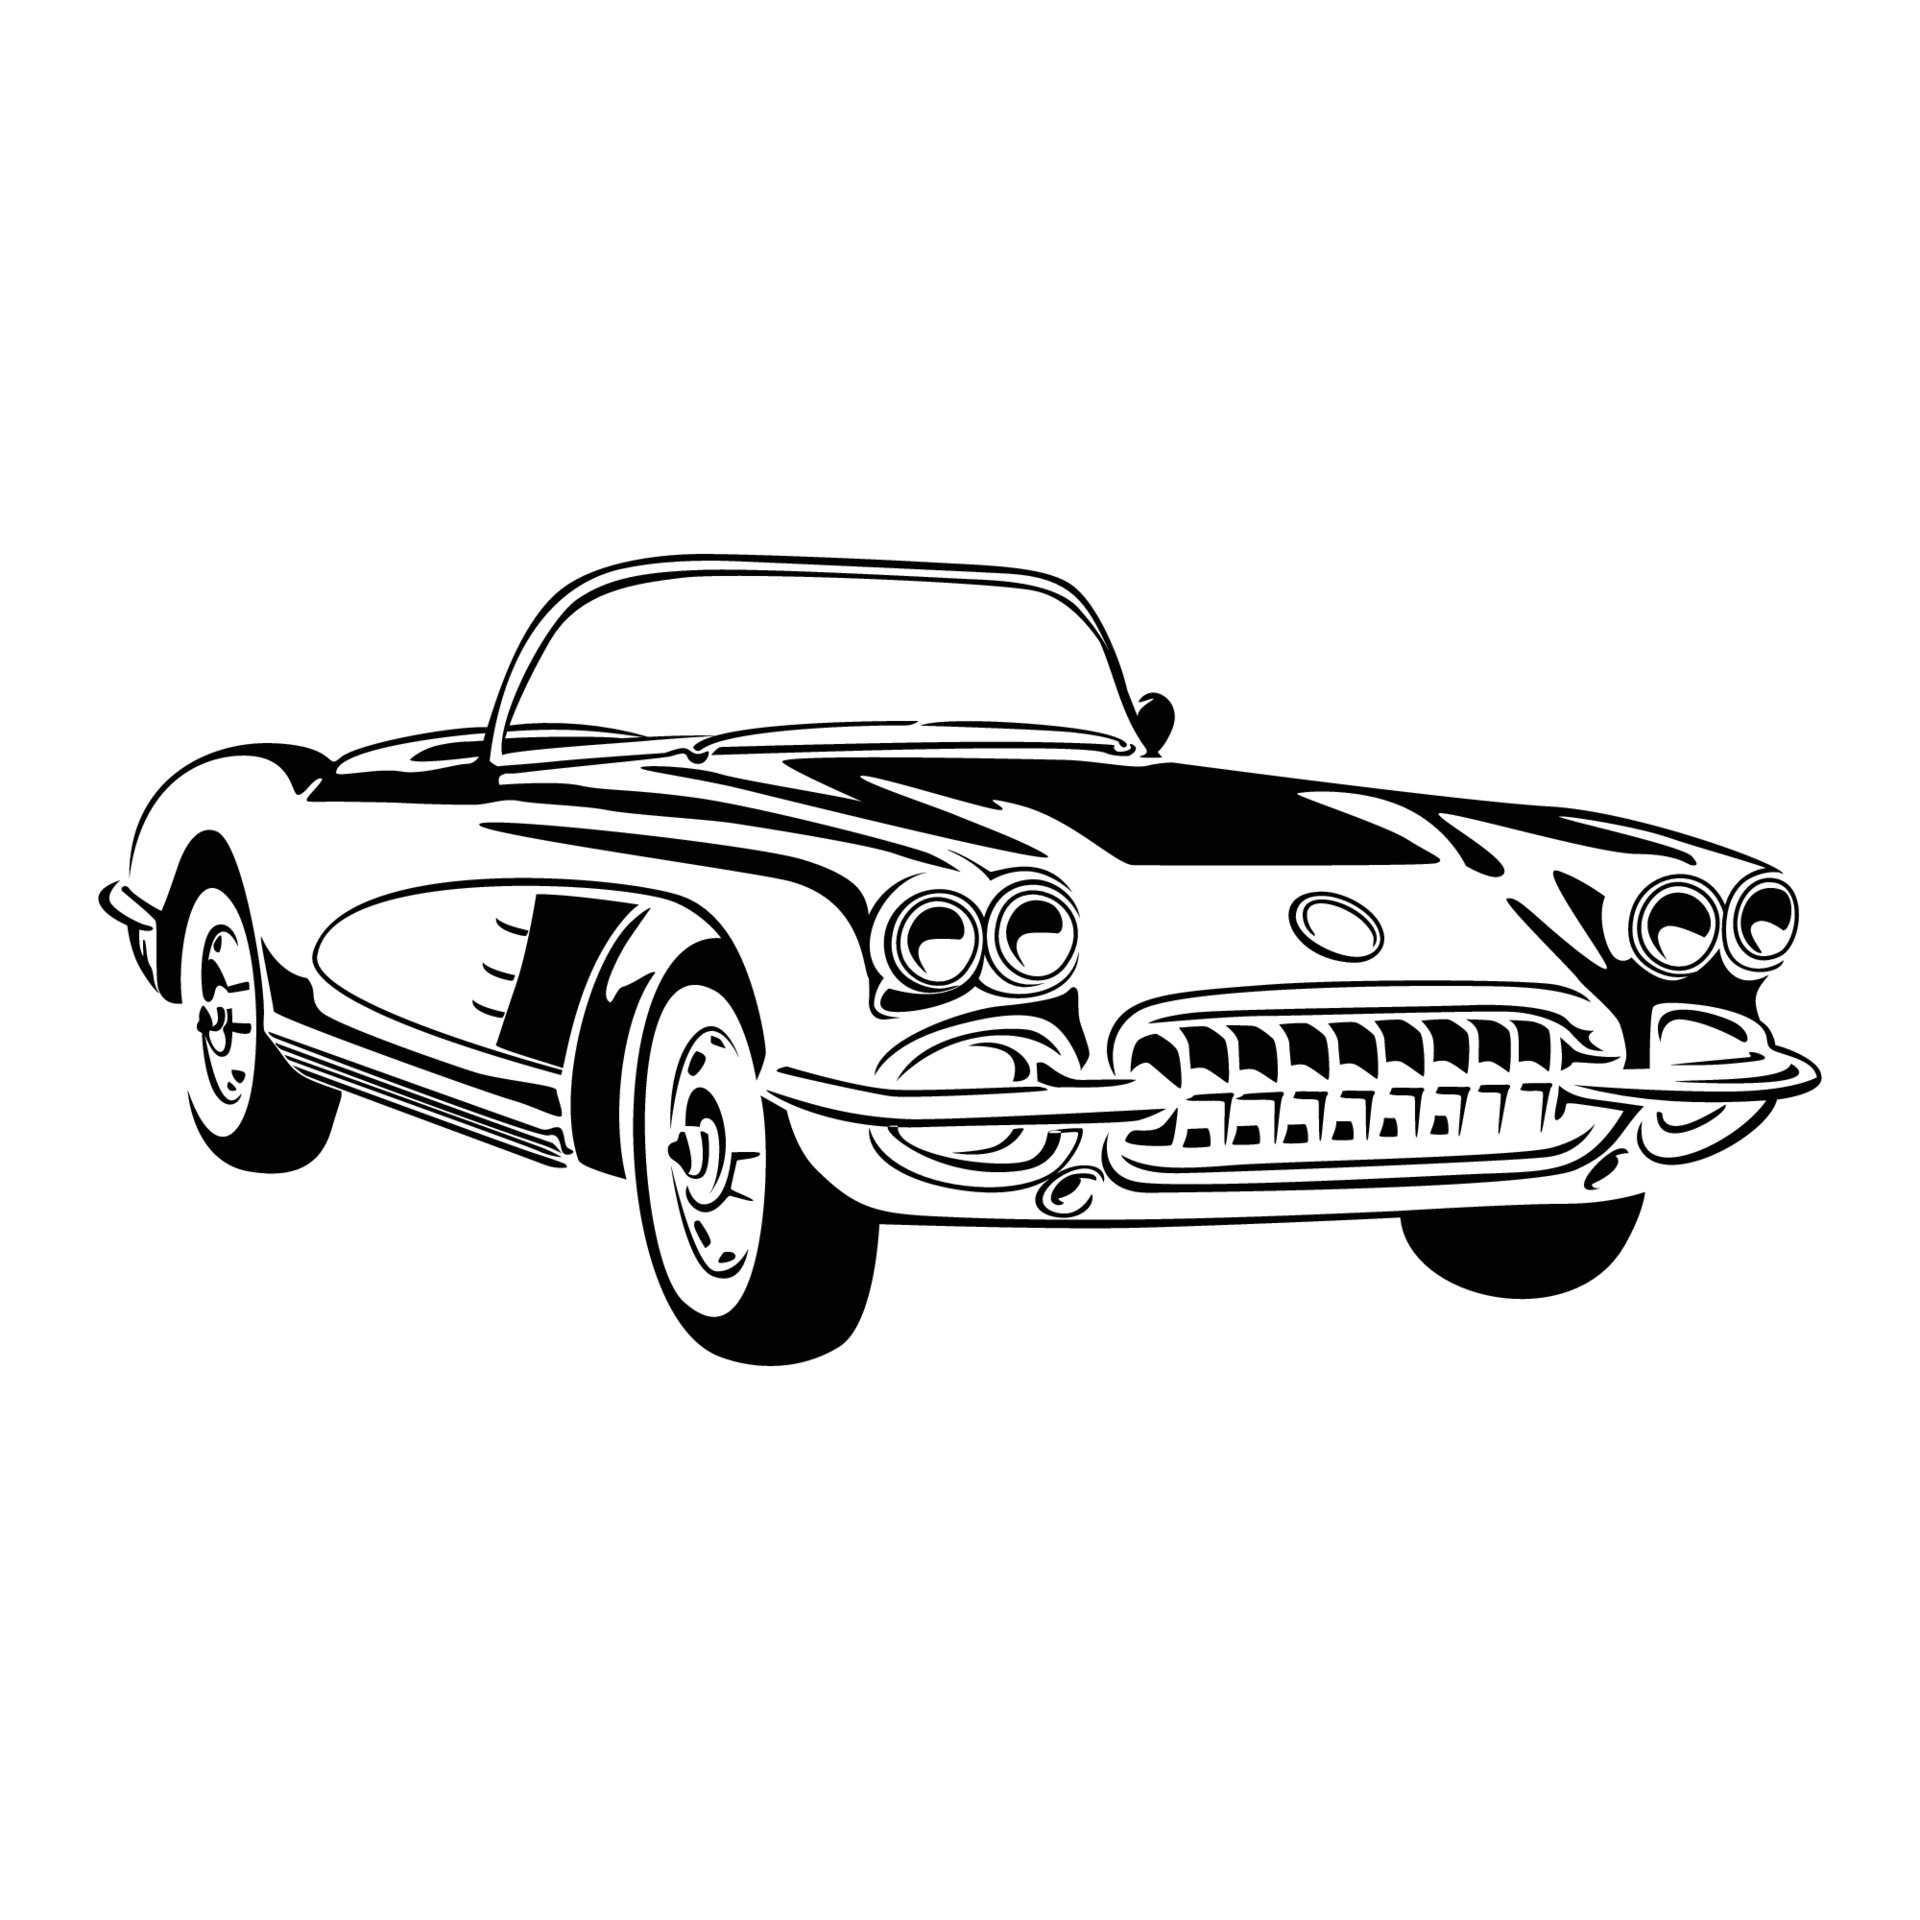 vintage car silhouette design. retro automobile icon, sign and